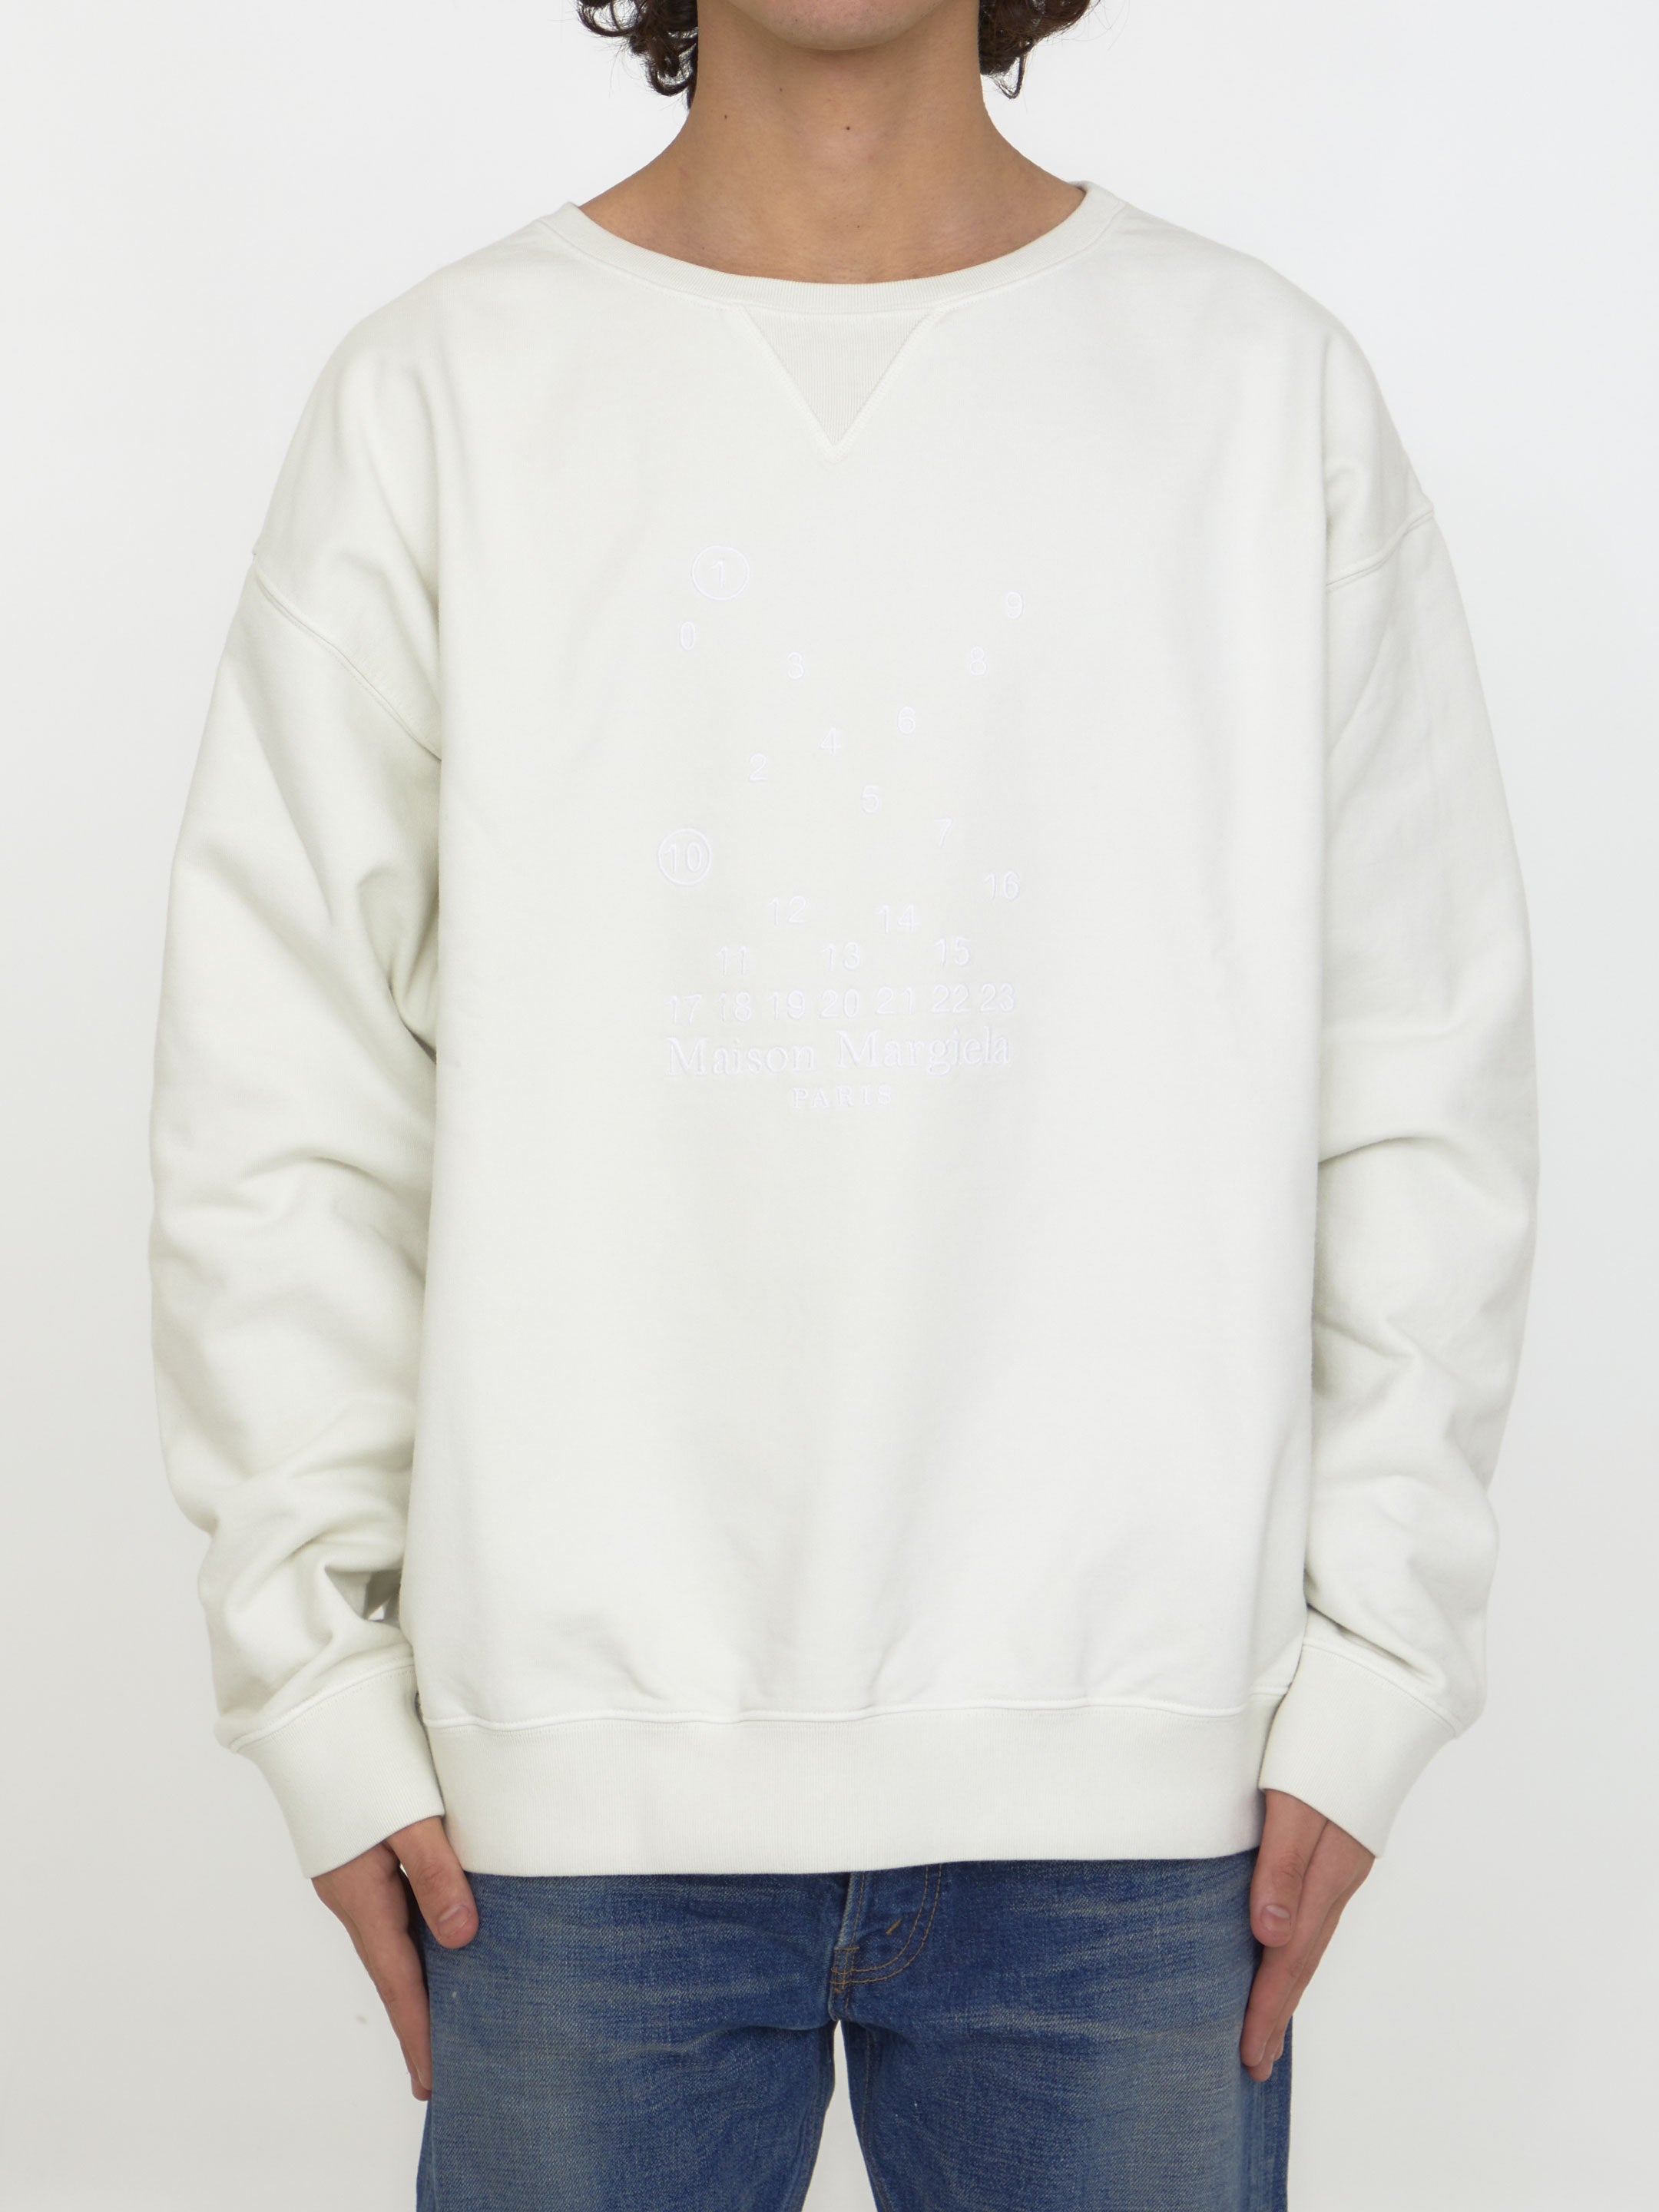 MAISON-MARGIELA-OUTLET-SALE-Numerical-logo-sweatshirt-Strick-M-WHITE-ARCHIVE-COLLECTION.jpg